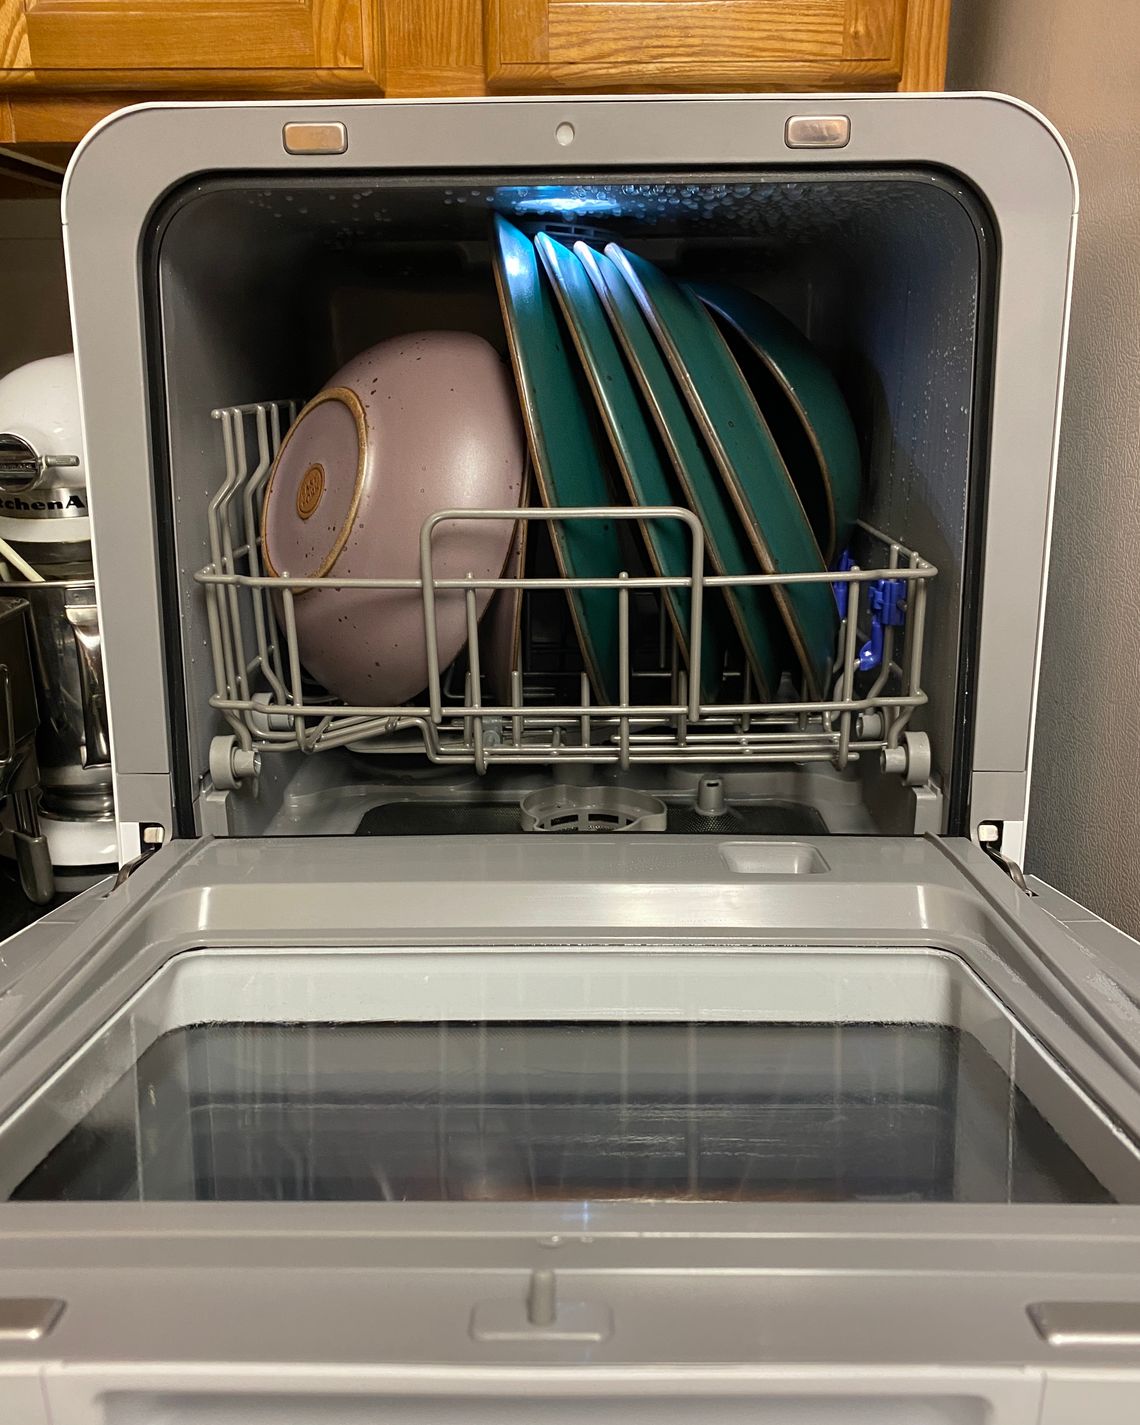 Farberware Portable Countertop Dishwasher Review 2020 | The Strategist